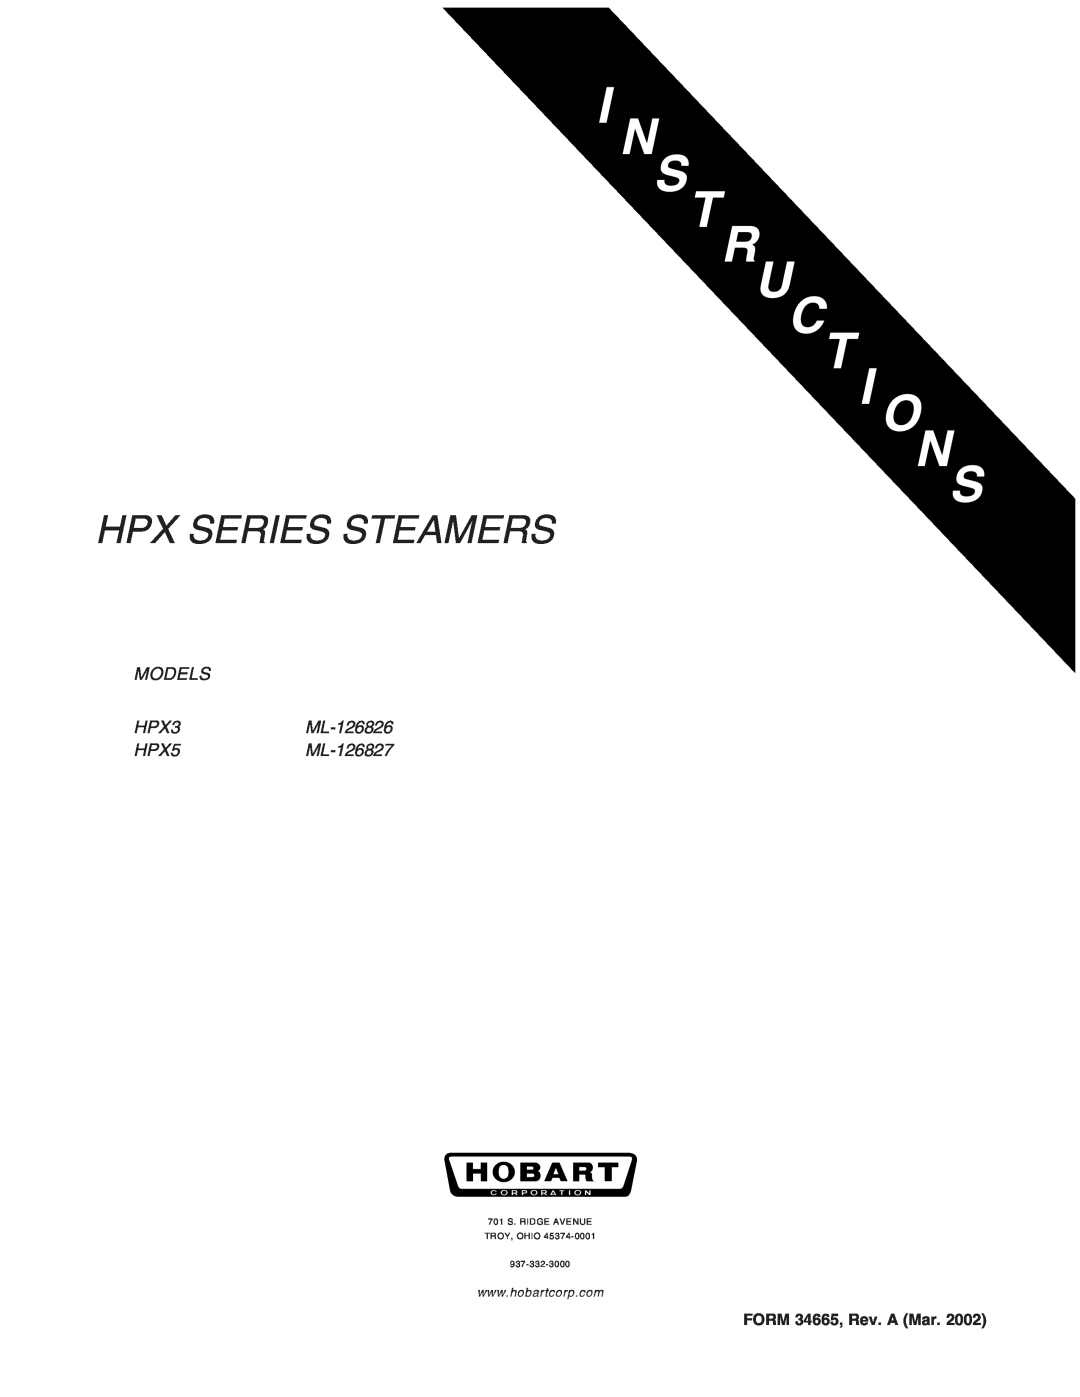 Hobart manual N S Truct I Ons, Hpx Series Steamers, MODELS HPX3ML-126826 HPX5ML-126827, FORM 34665, Rev. A Mar 